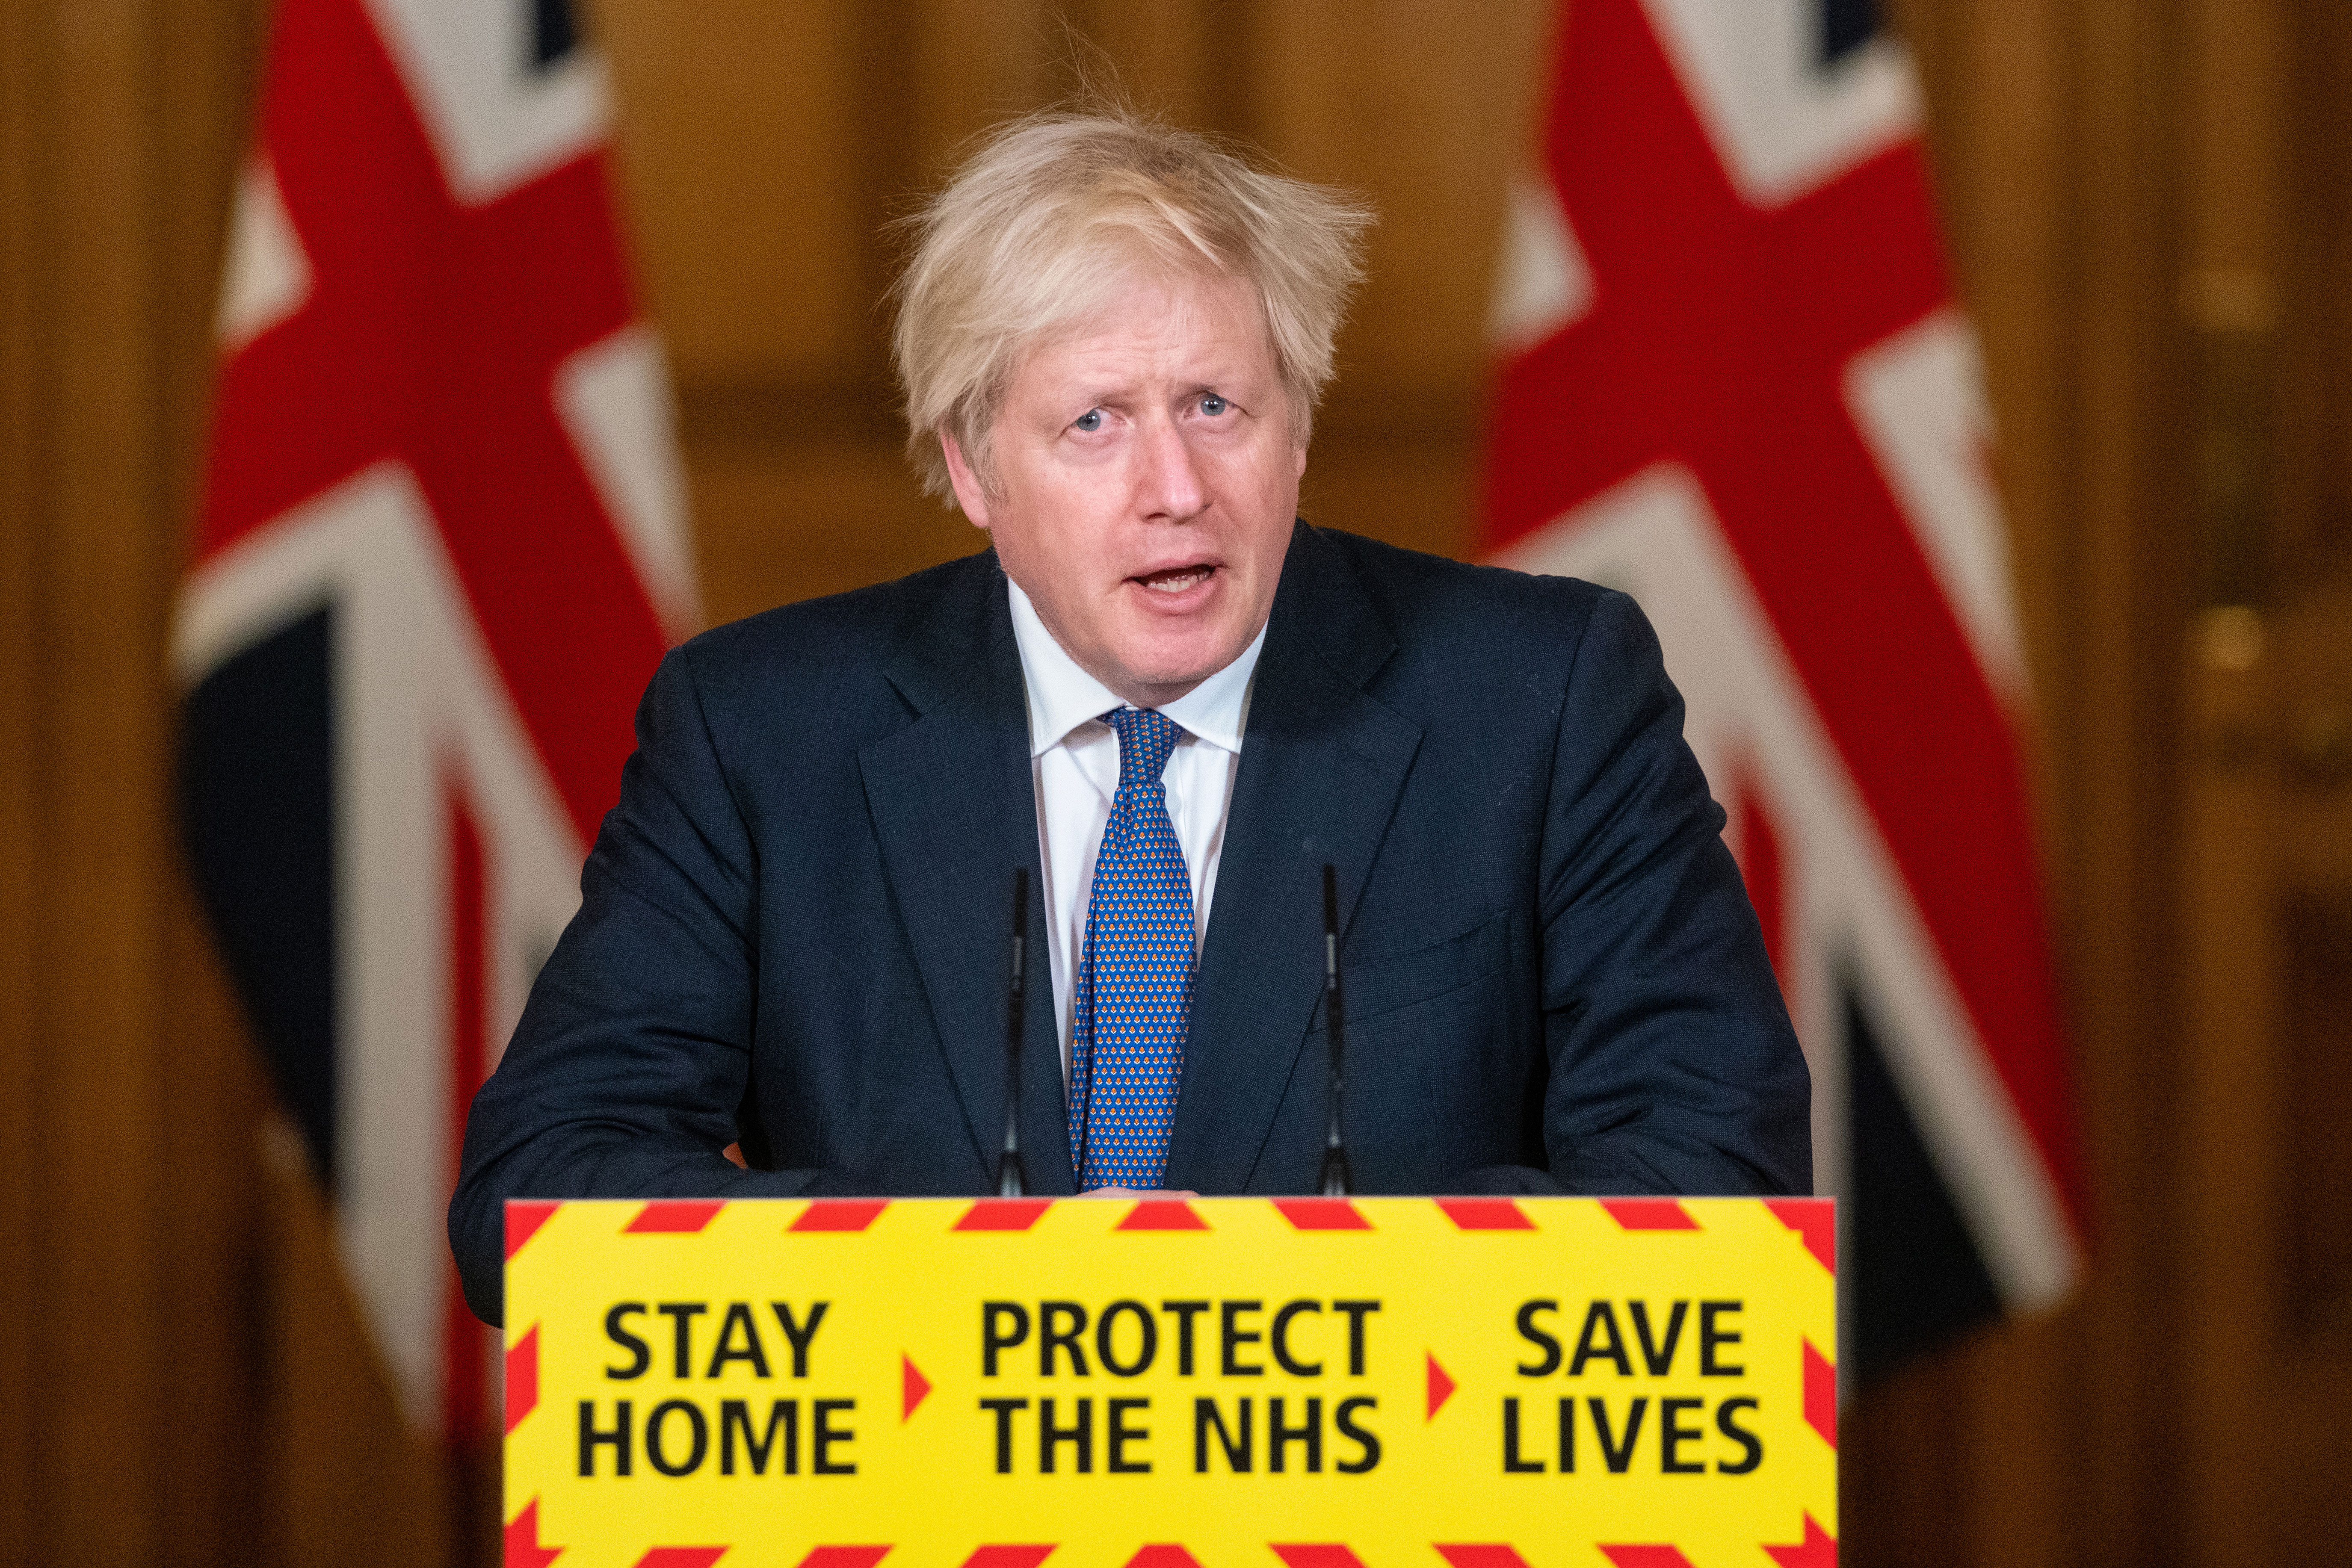 UK Prime Minister Boris Johnson speaks during a media briefing in London on January 15.